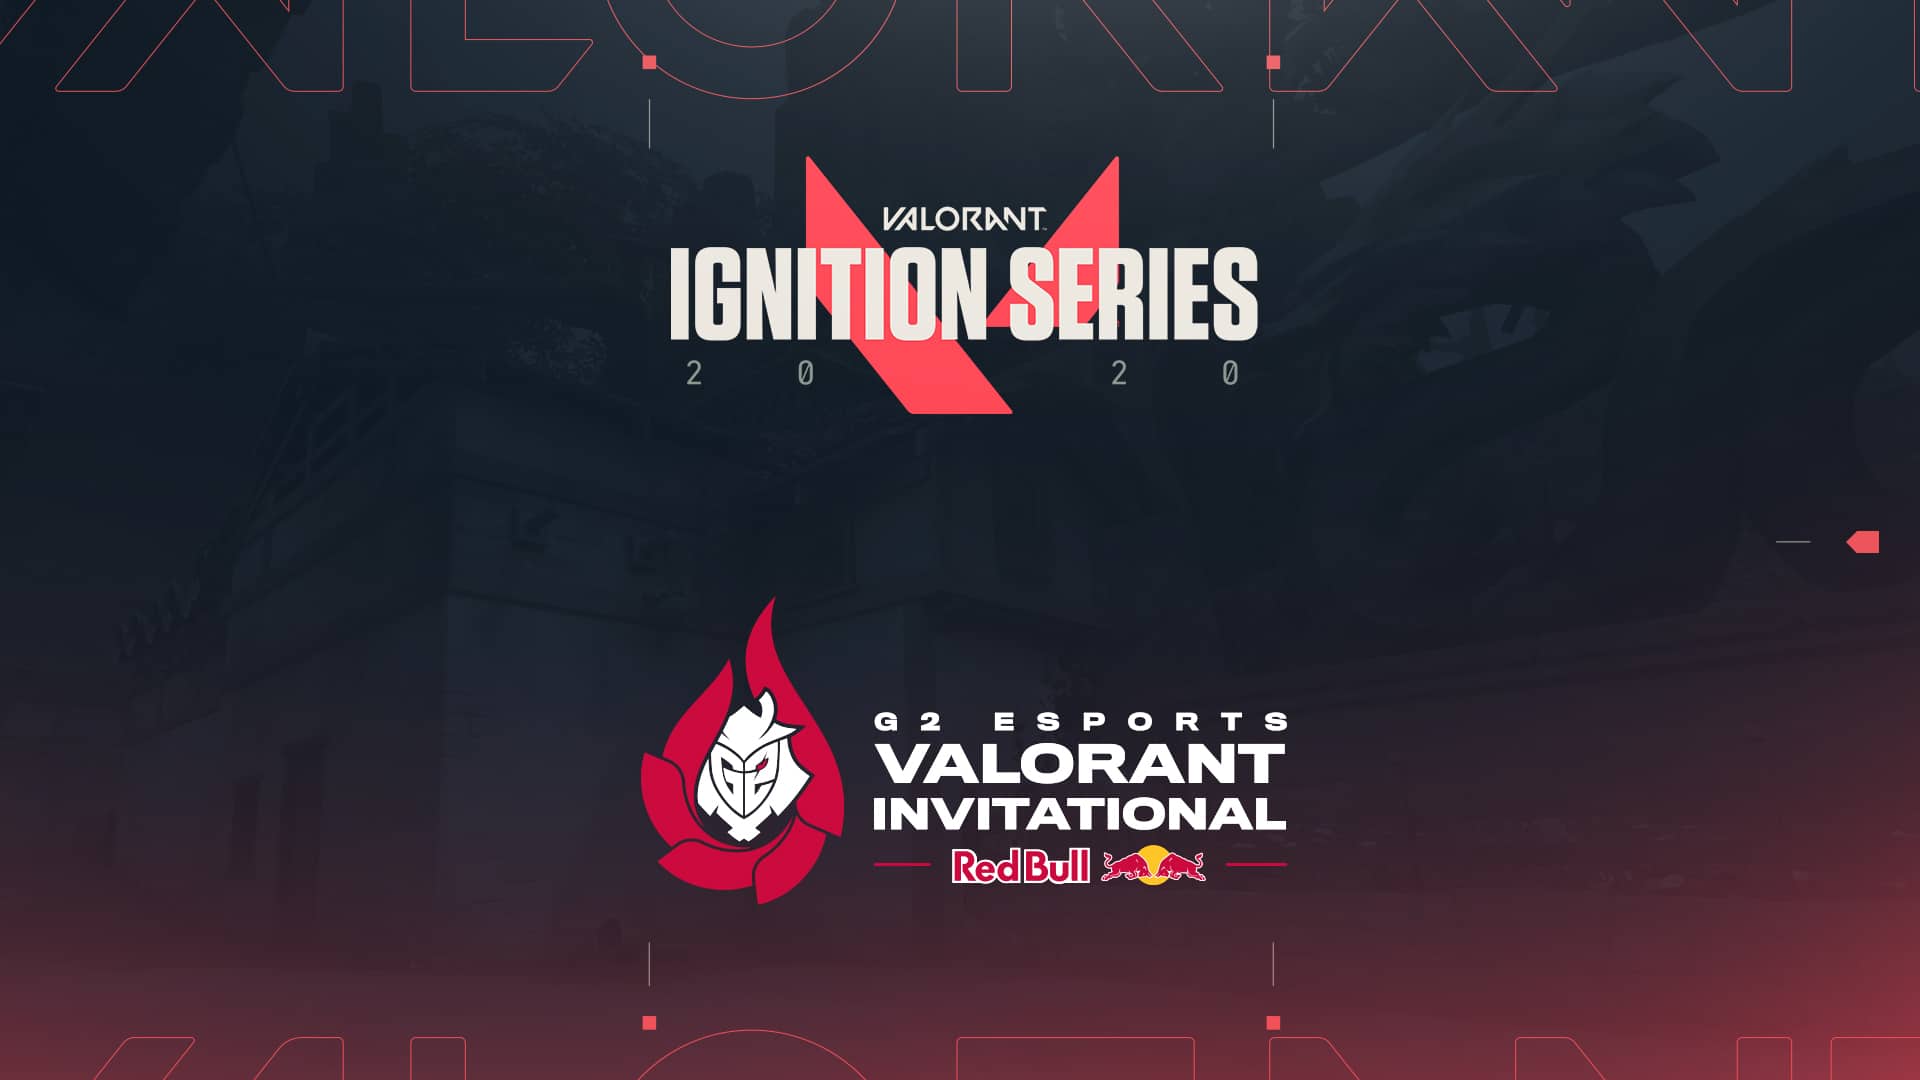 G2 Esports VALORANT Ignition Series VulkanBet